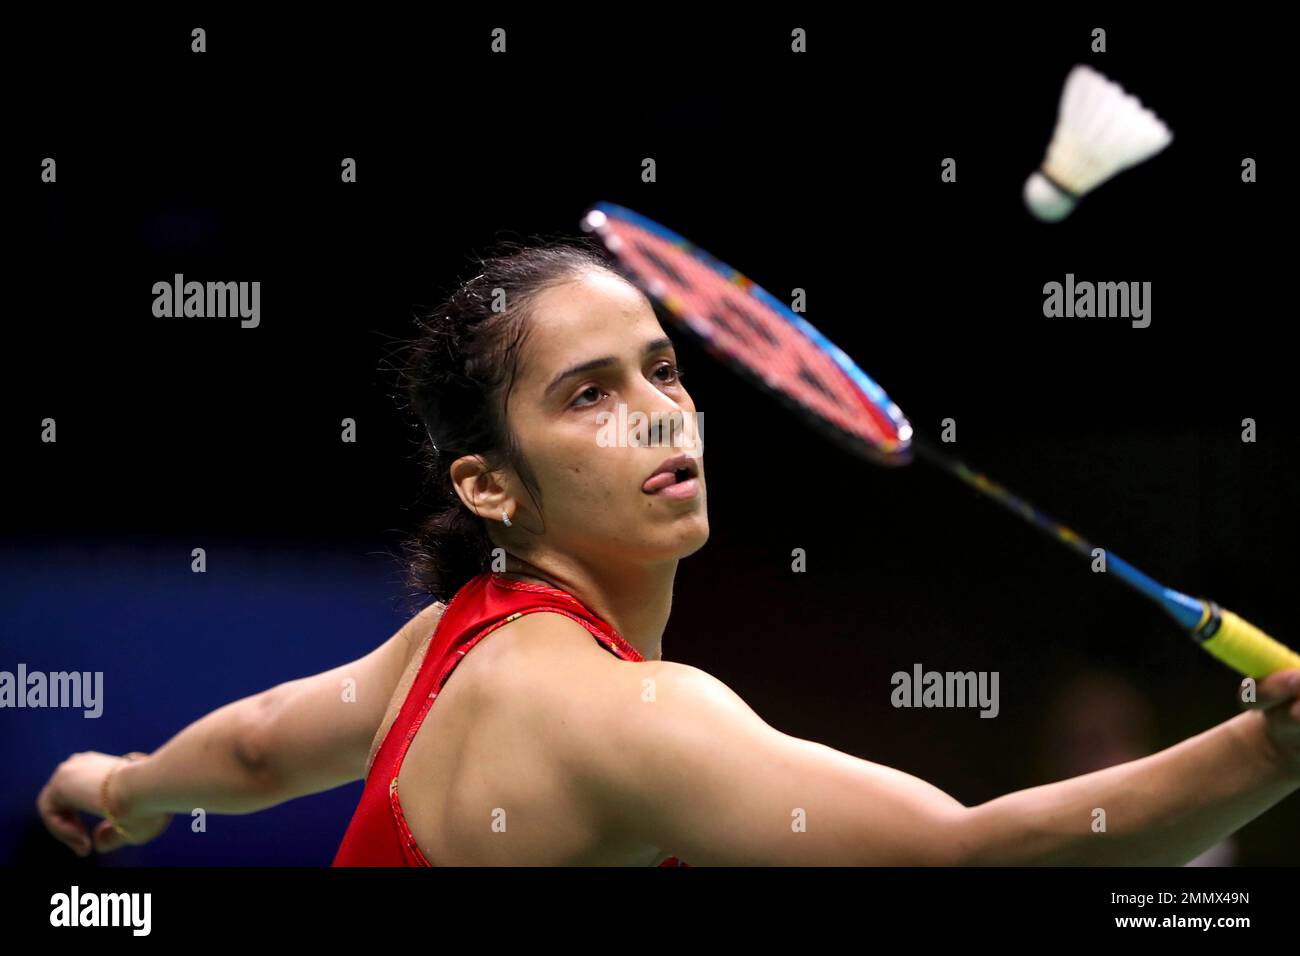 Saina Nehwal of India plays a shot against Aliye Demirbag of Turkey during their womens badminton singles match at the BWF World Championships in Nanjing, China, Tuesday, July 31, 2018